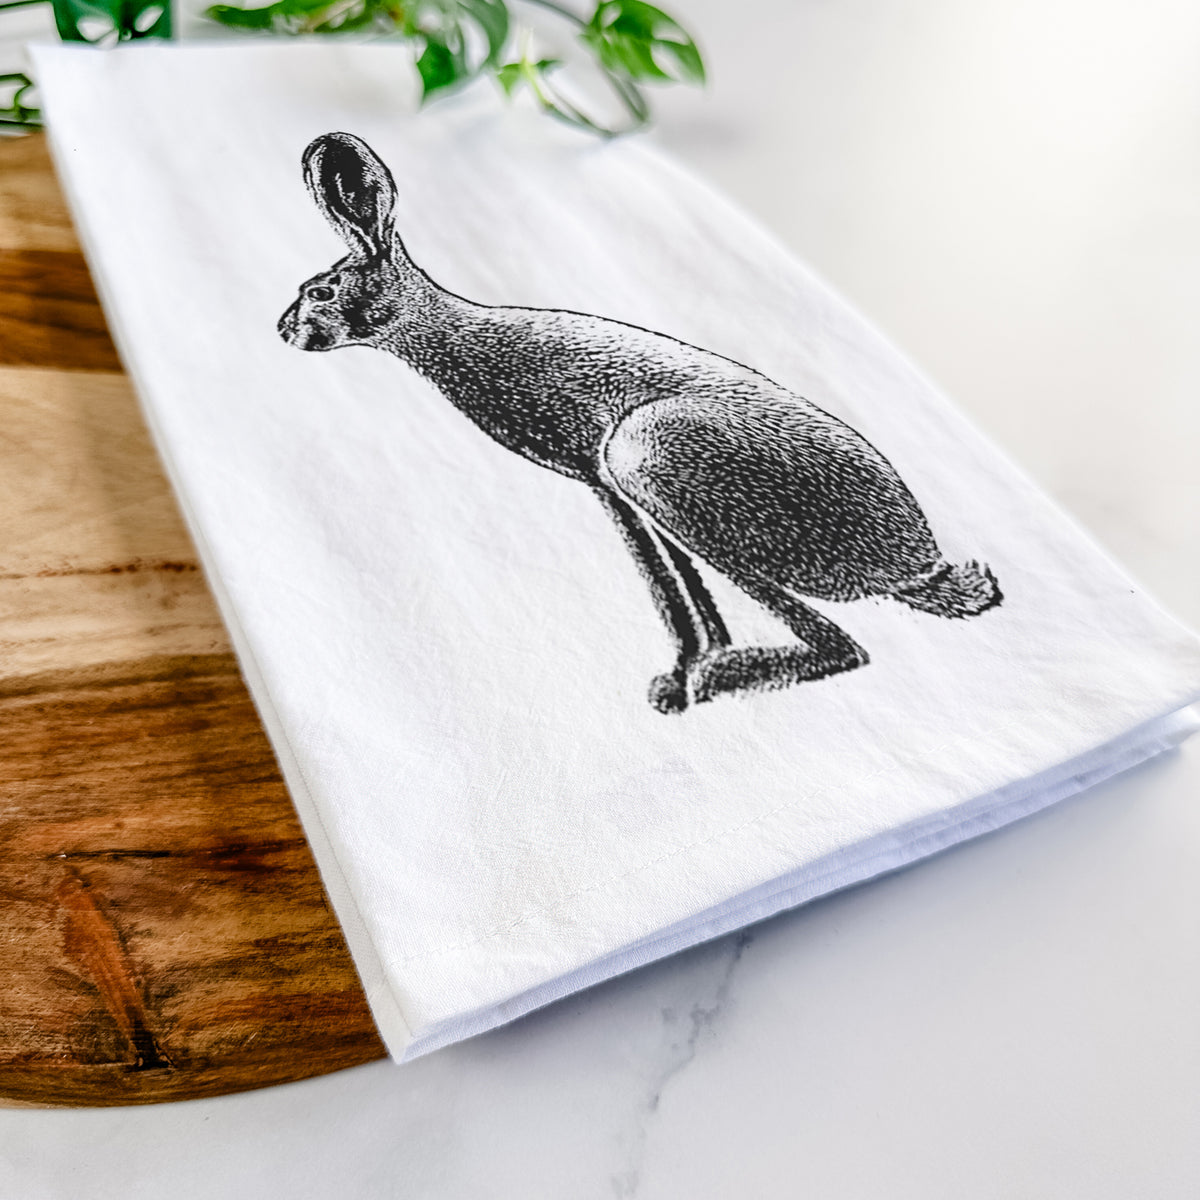 Wild California Hare - Black-tailed Jackrabbit Tea Towel